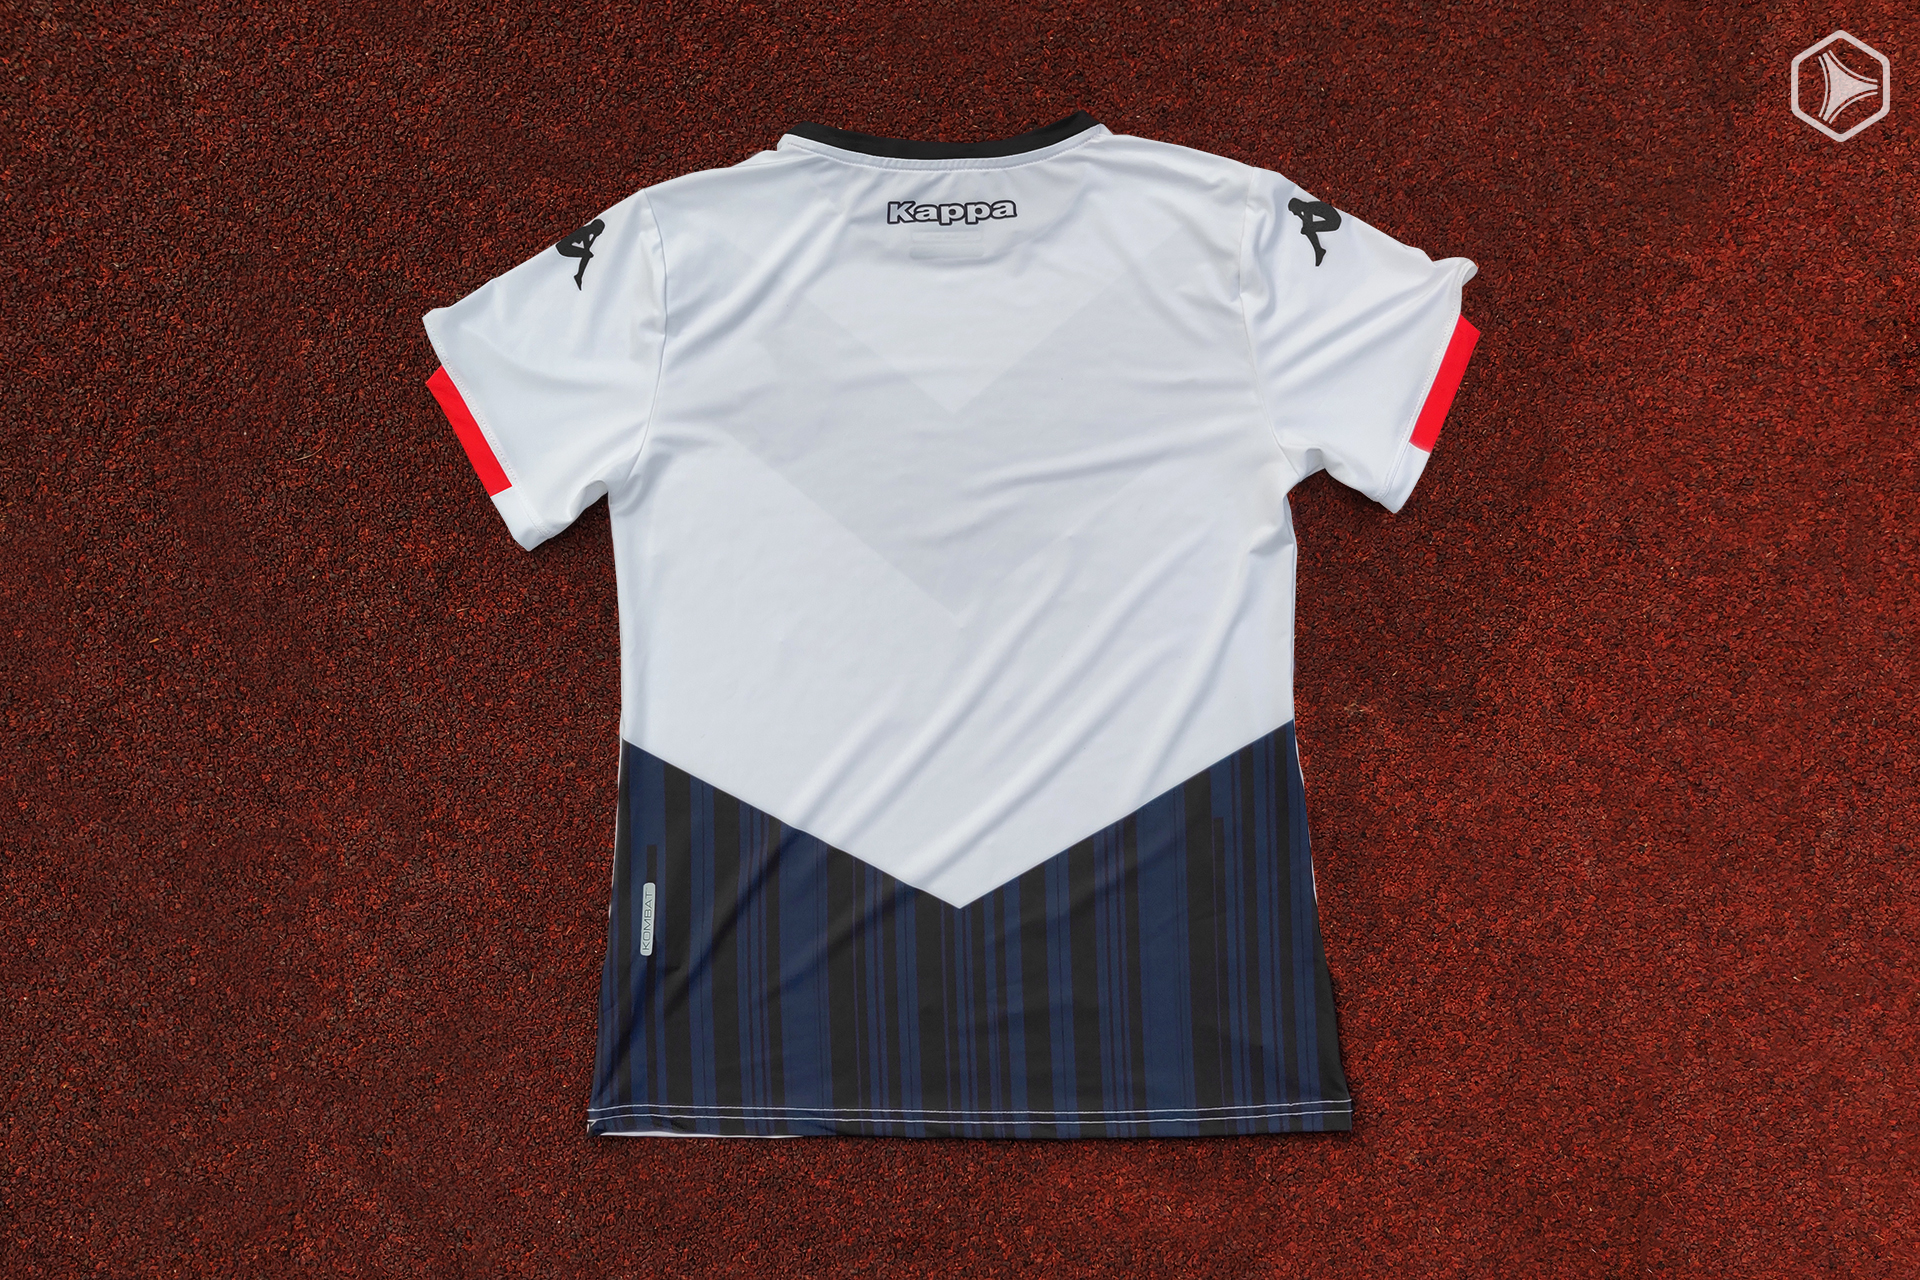 Camisetas femeninas Kappa de Vélez Sarsfield 2019/20 - Camisetas de futbol replicas baratas